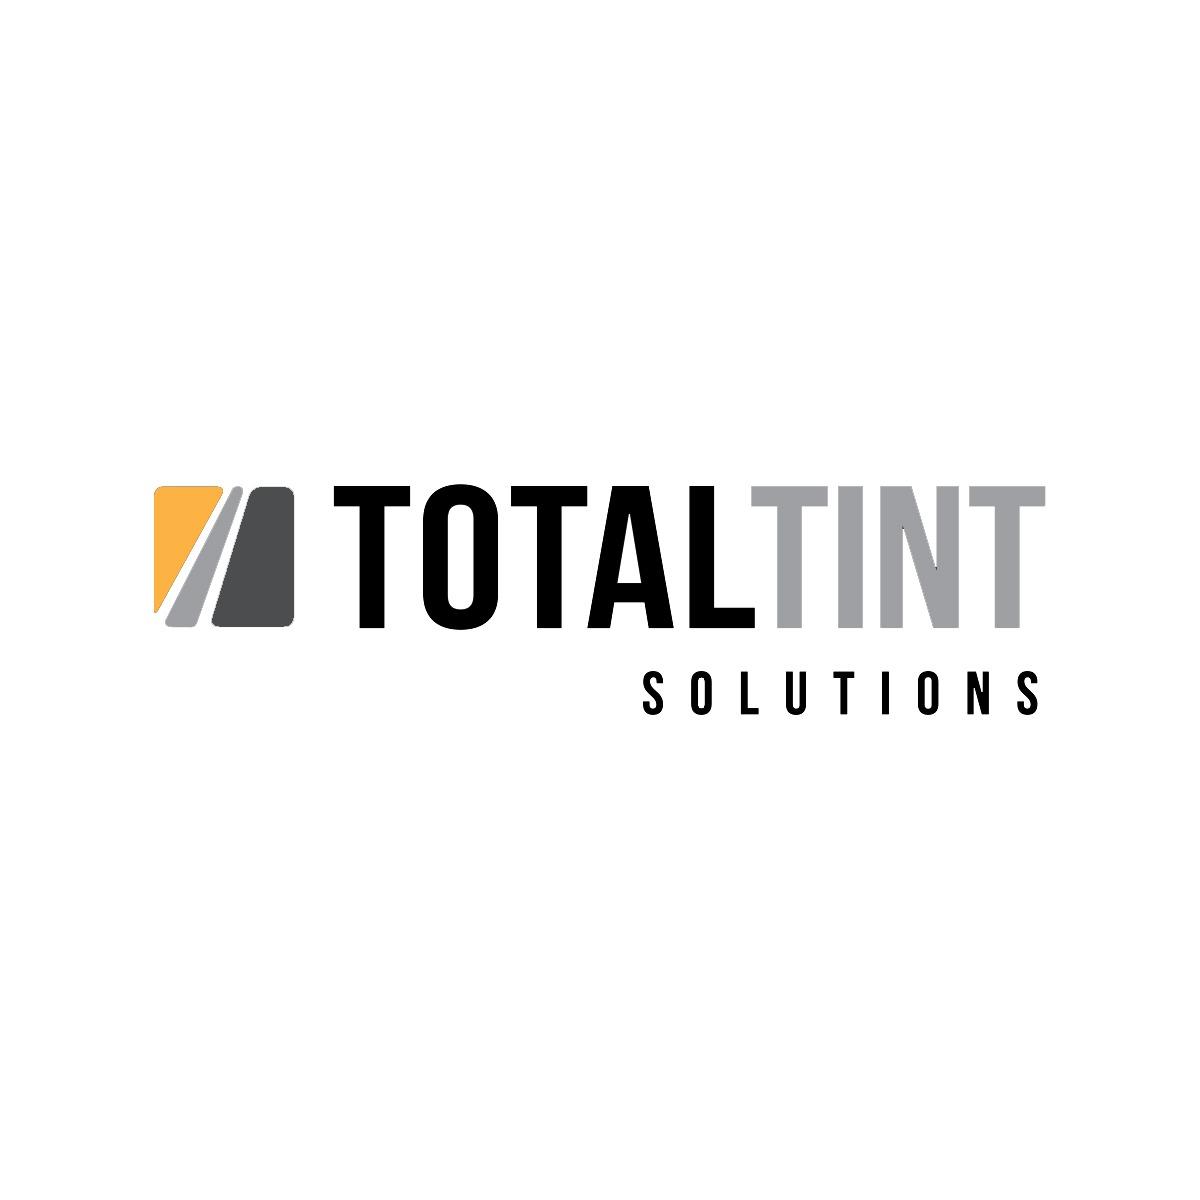 Total Tint Solutions Myaree Total Tint Solutions Myaree Myaree (08) 9317 1010